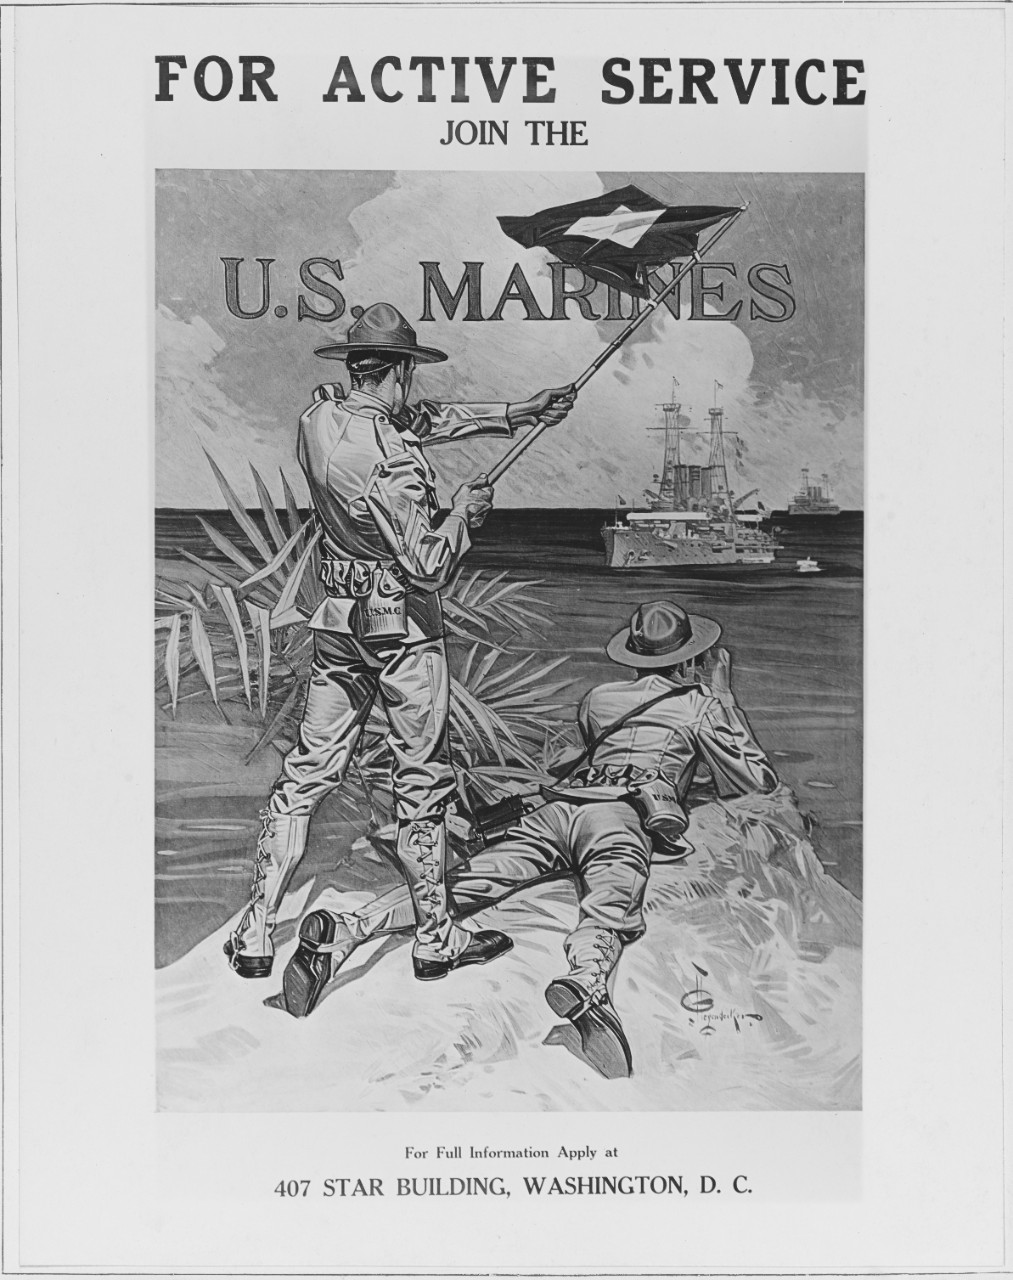 U.S. marine corps poster